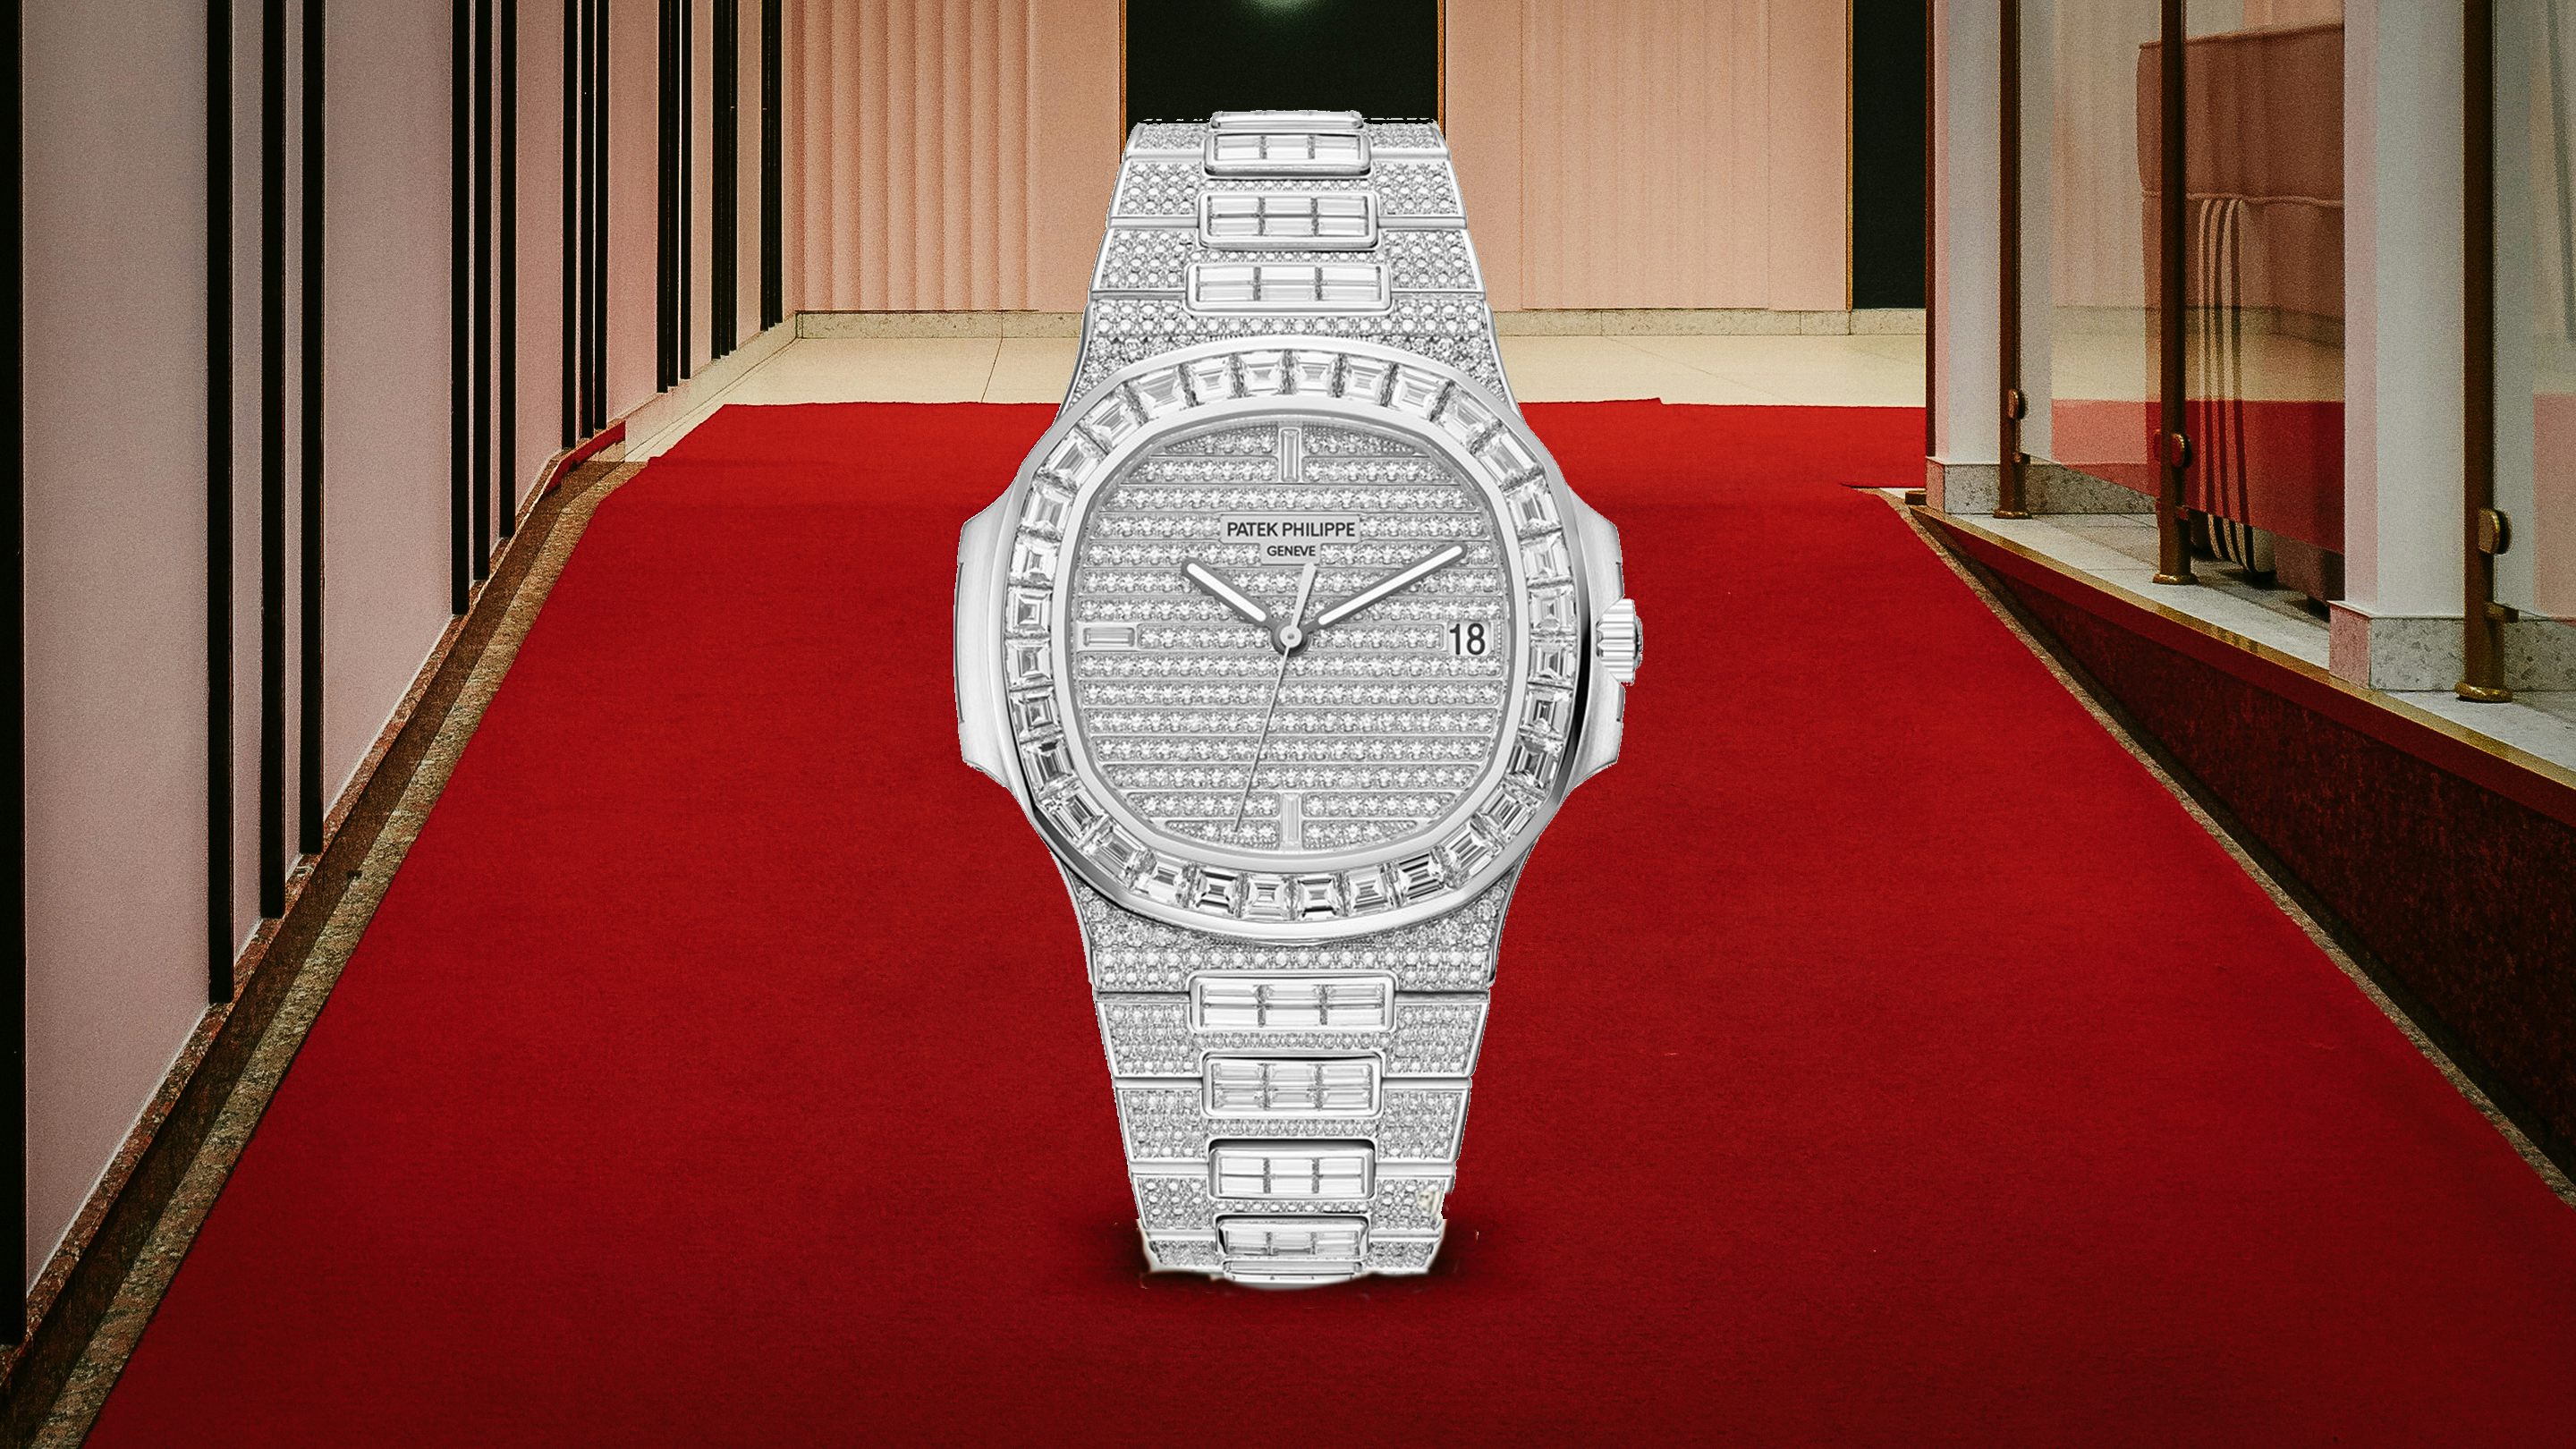 Buy & Sell Patek Philippe Nautilus 5719/10G-010 Diamond Watch